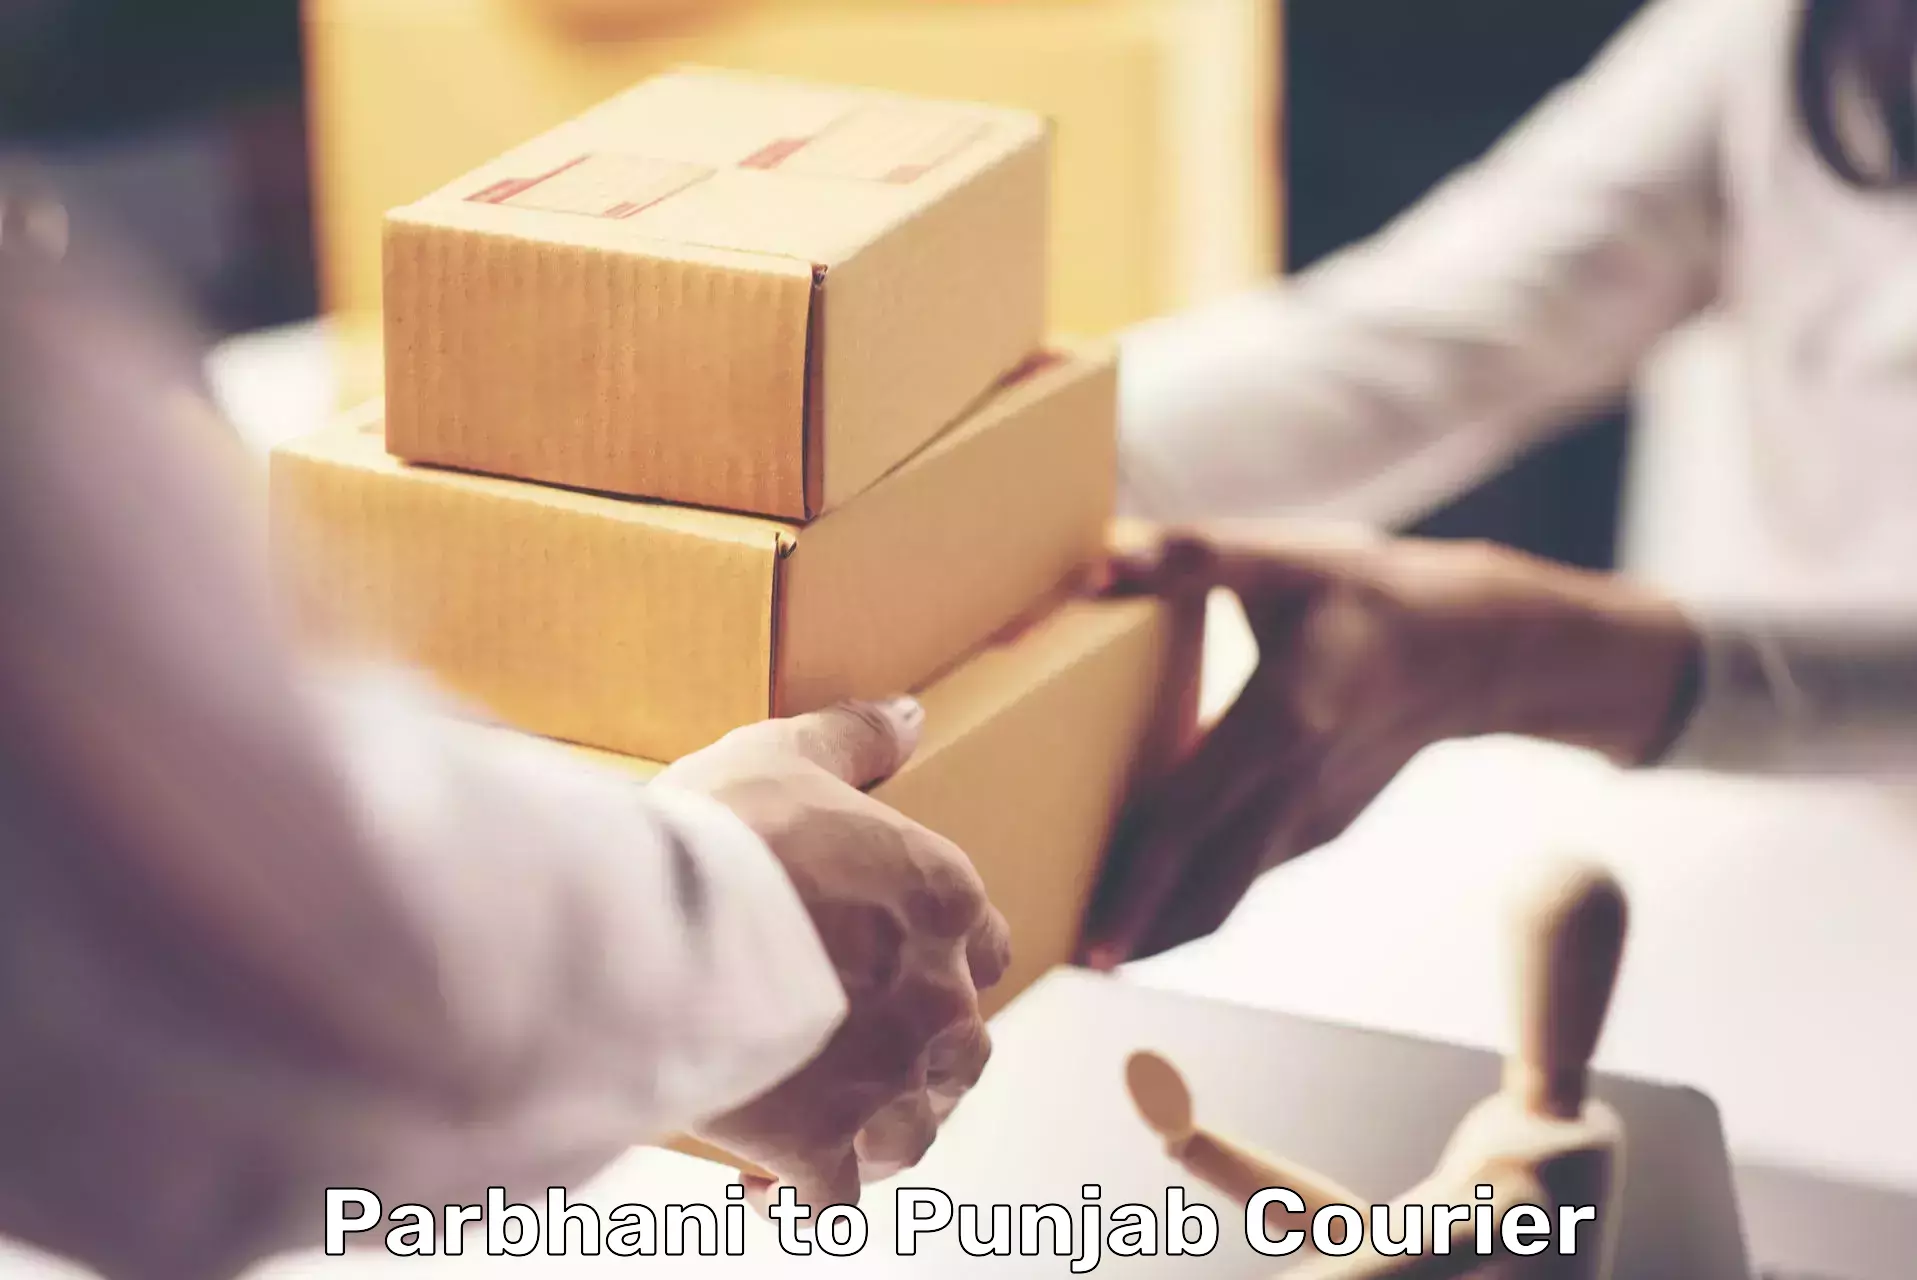 Global logistics network Parbhani to Dhuri